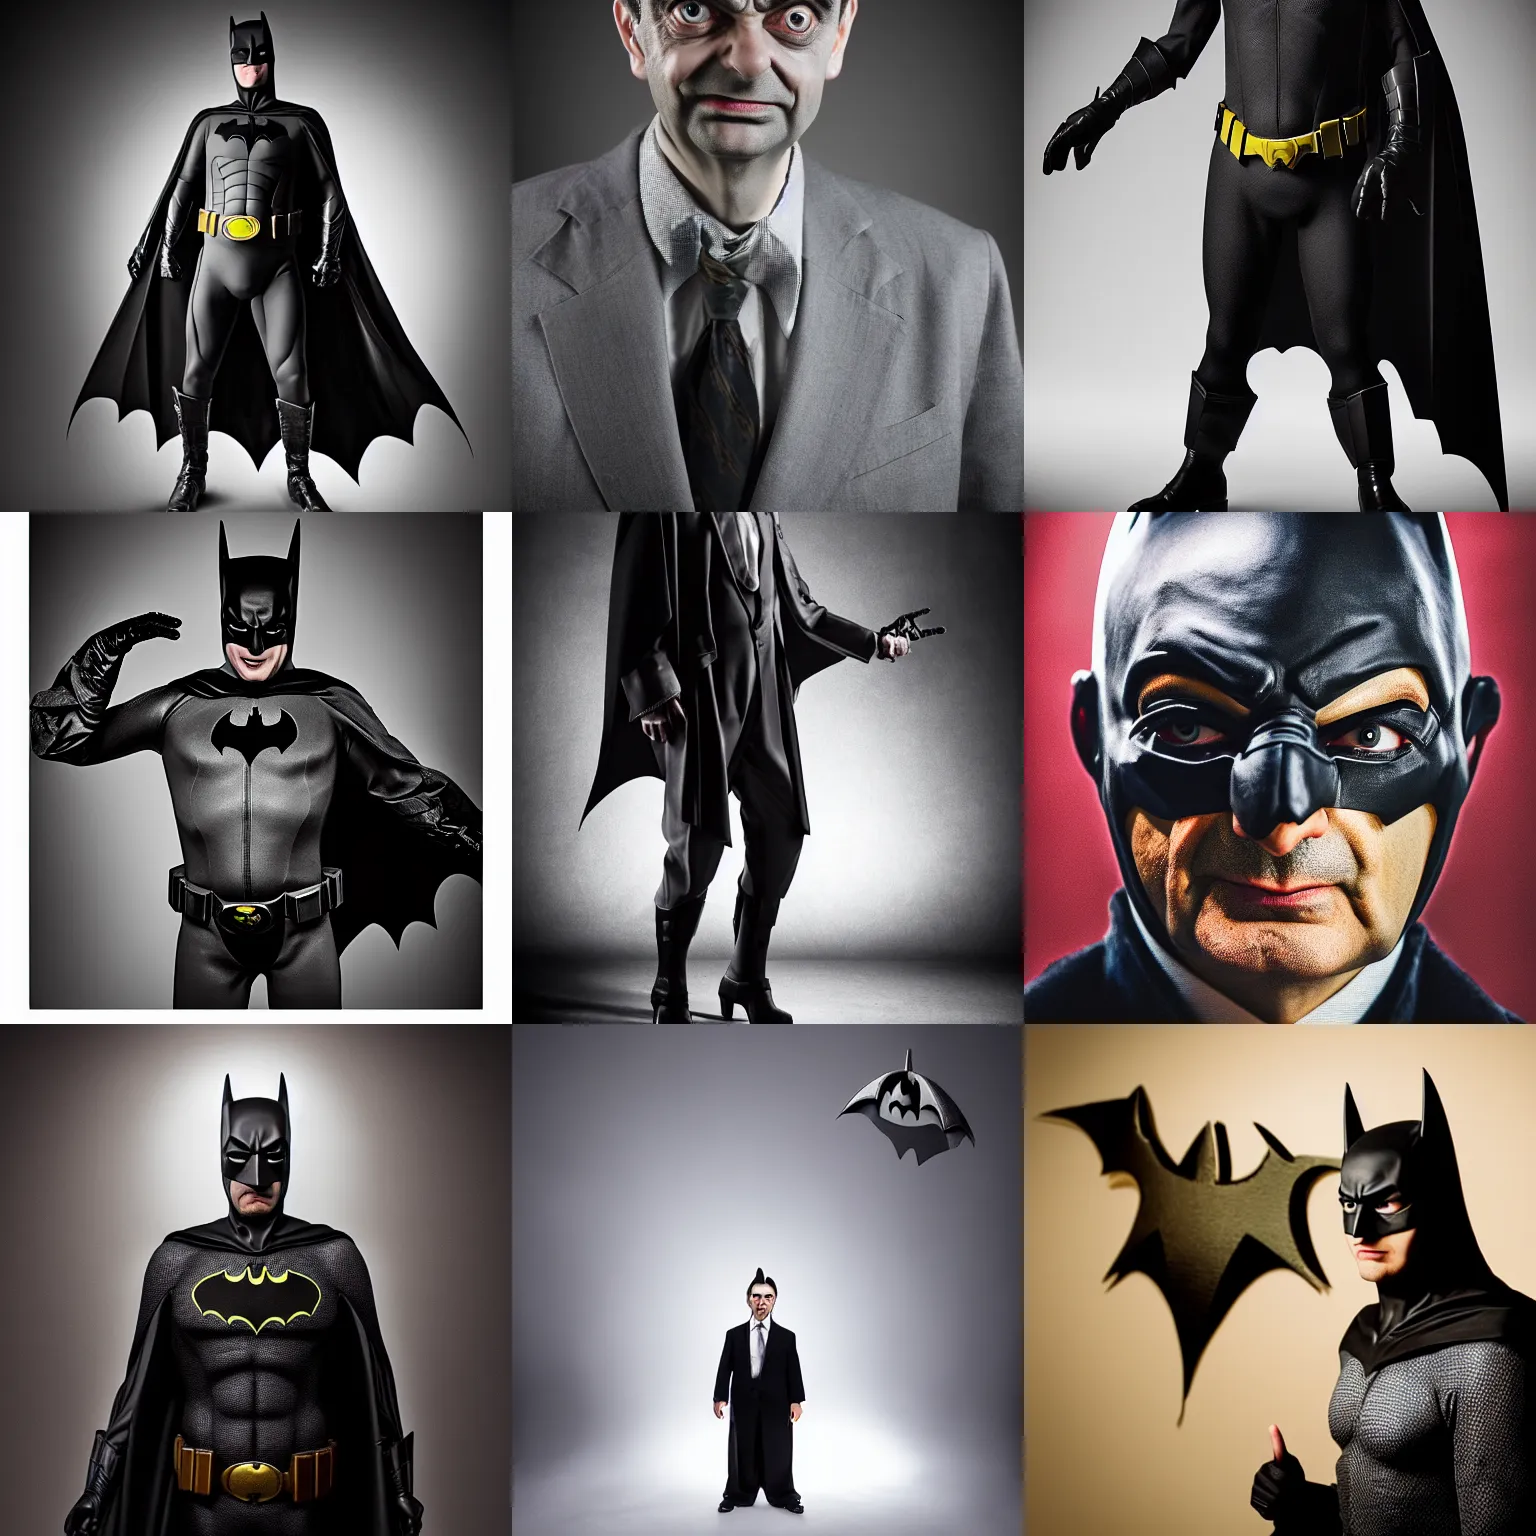 Prompt: mr. bean as batman, studio portrait, highly detailed, cinematic lighting, dark ambient